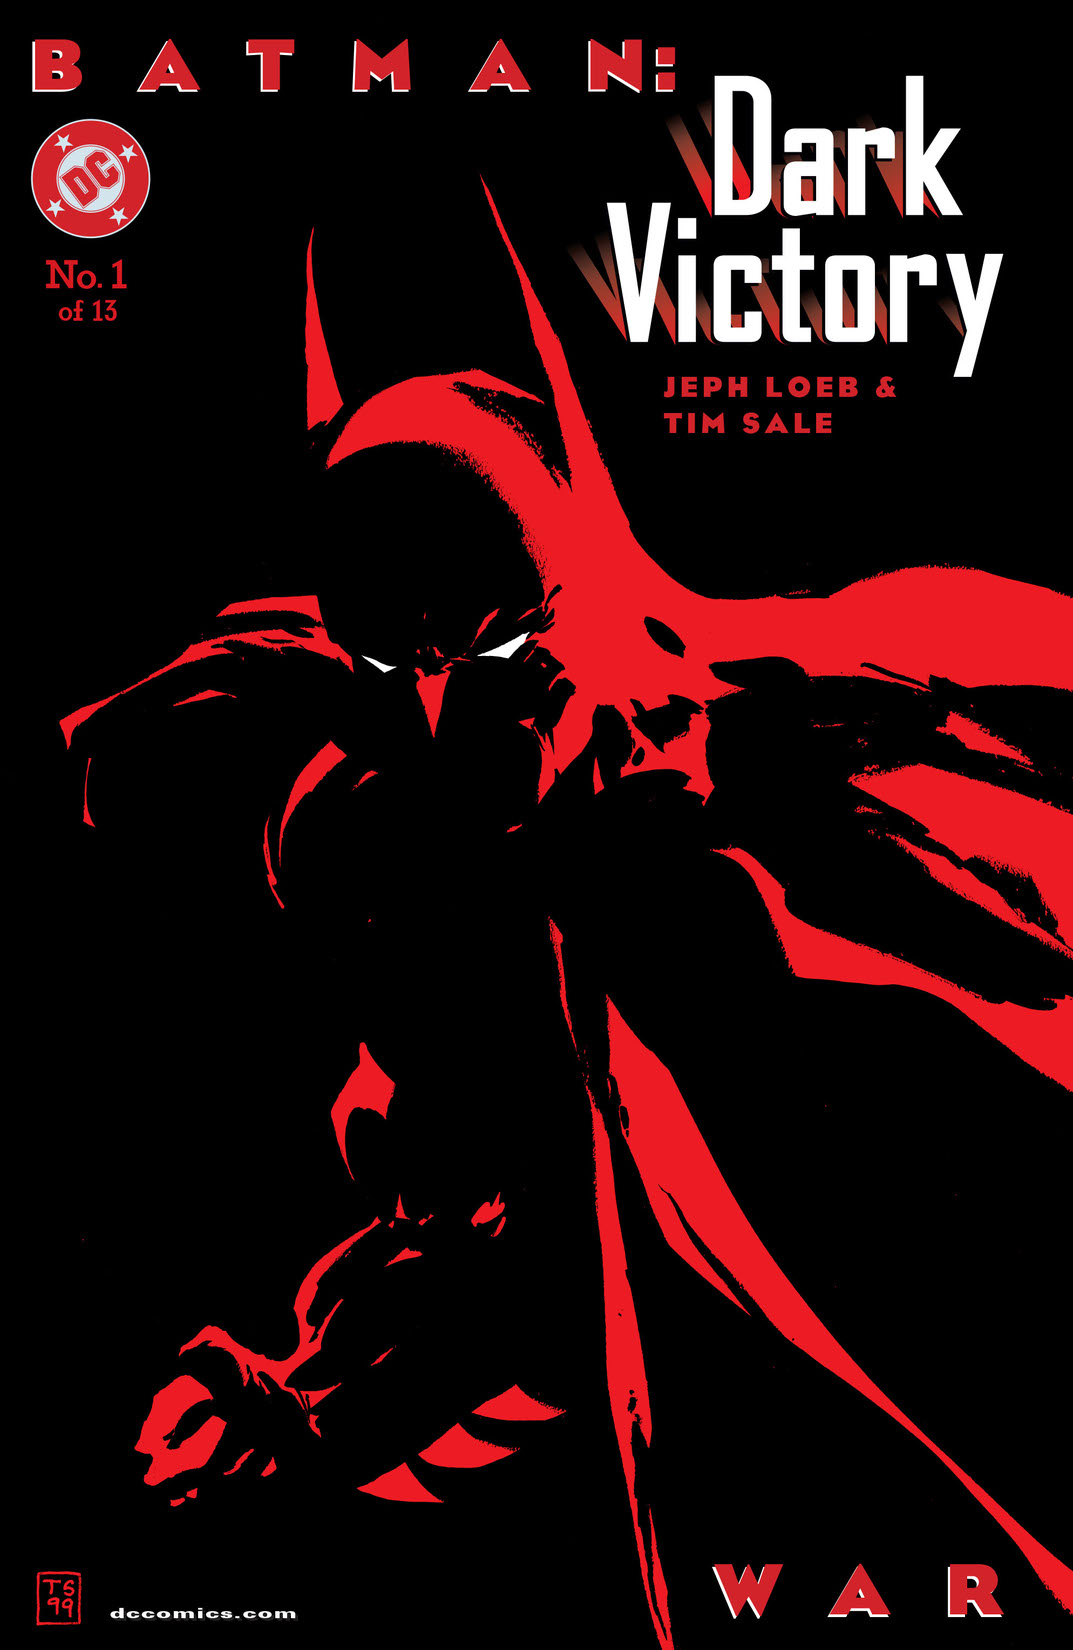 Batman: Dark Victory #1 preview images